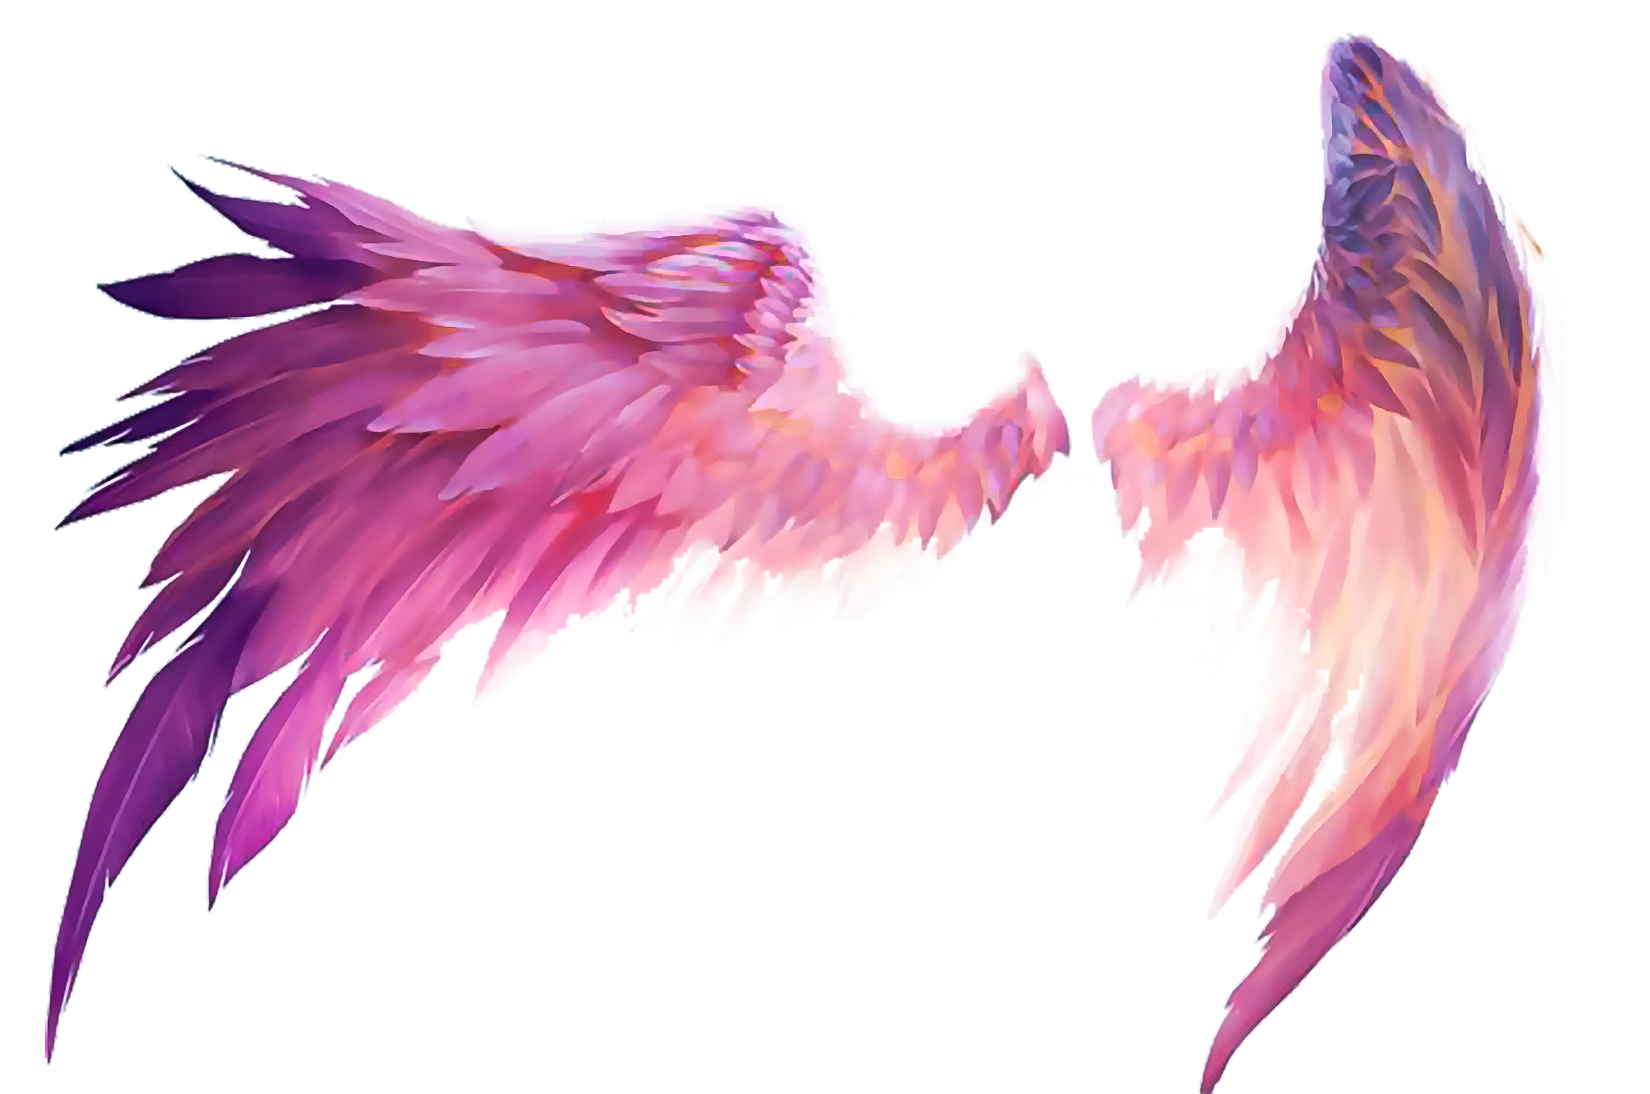 yabai asas asa wing wings angel anjo sticker by @yabai_editz